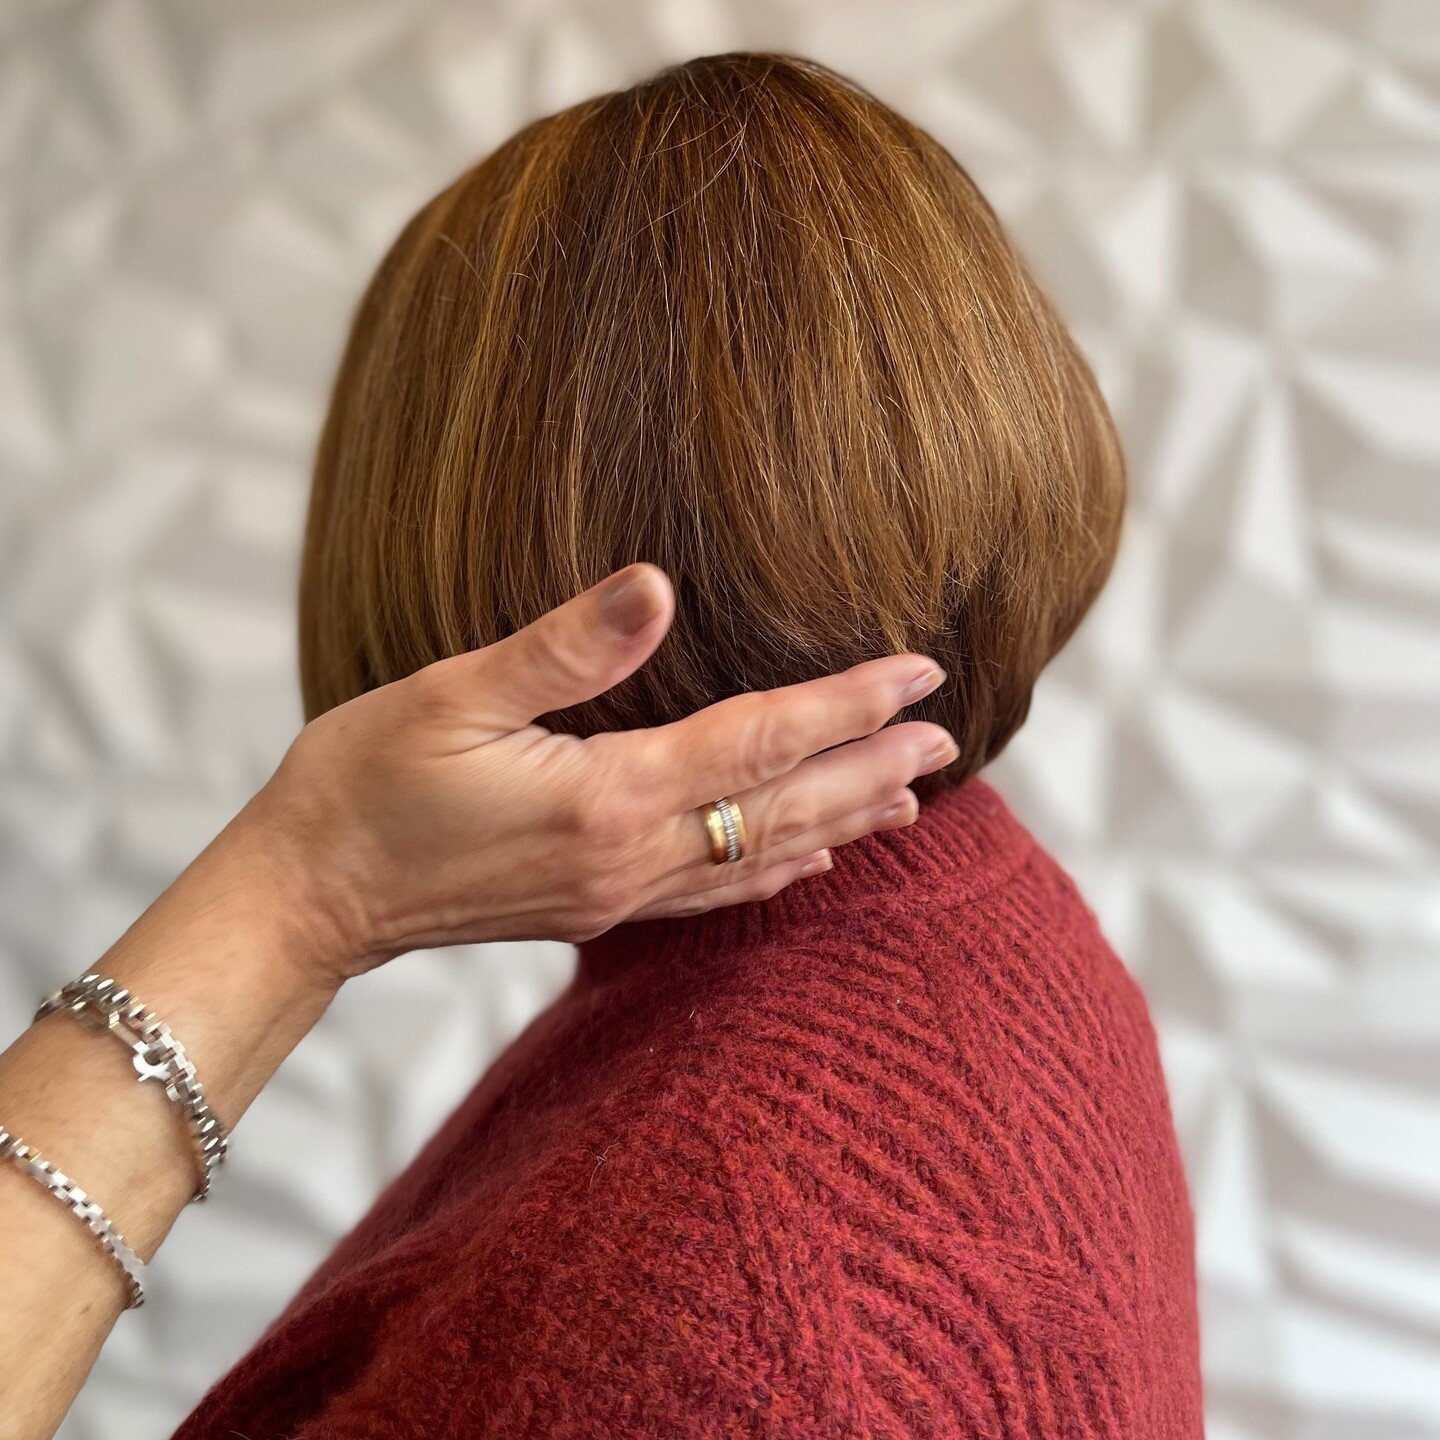 Stack bob hair style by Karen

#townoflexingtonma 
#burlingtonma 
#bedfordma 
#concordma 
#concordmassachusetts 
#lexingtonma